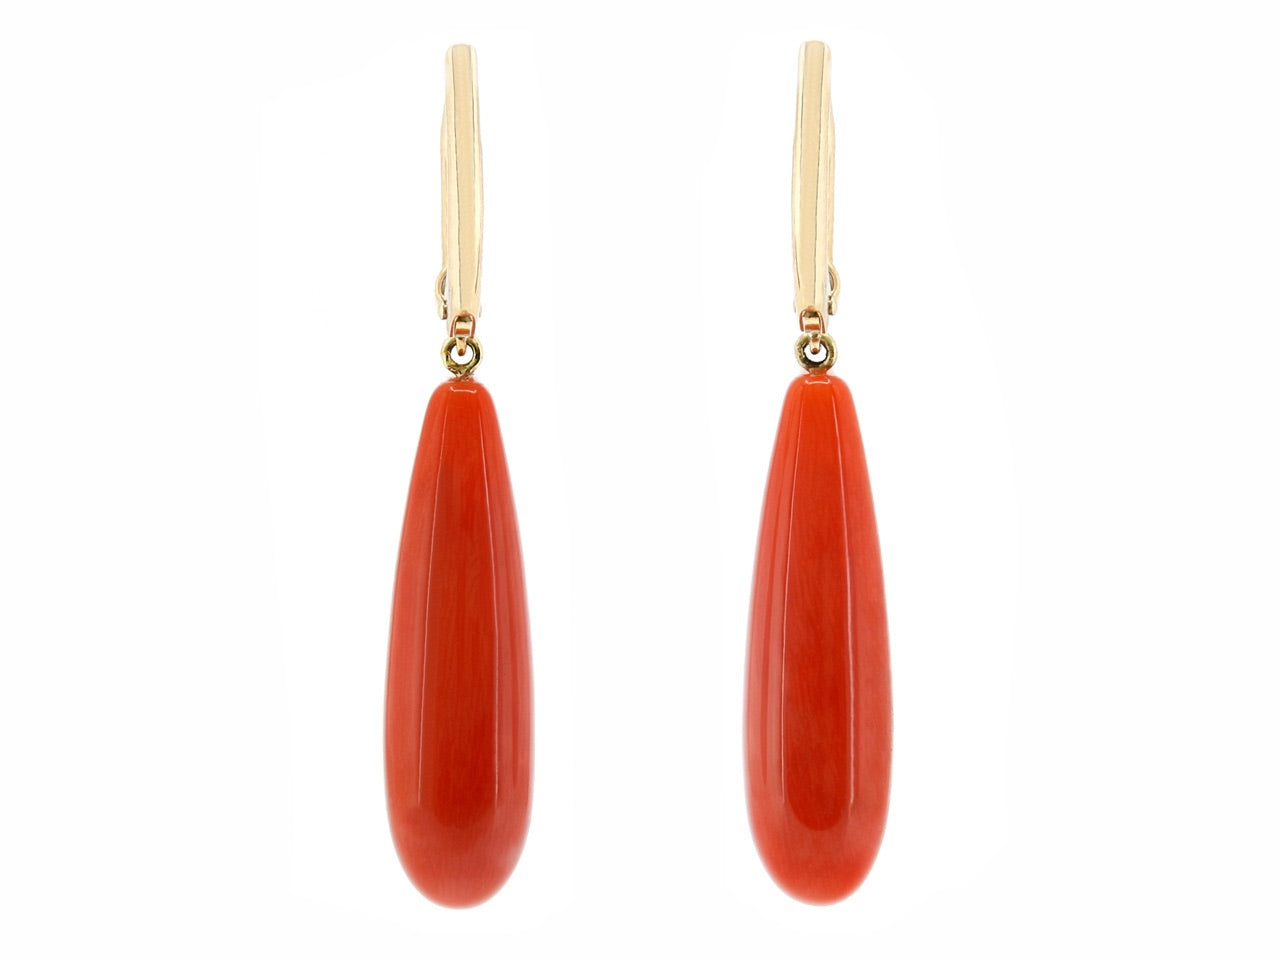 Beladora 'Bespoke' Red Coral and Diamond Dangle Earrings in 18K Gold